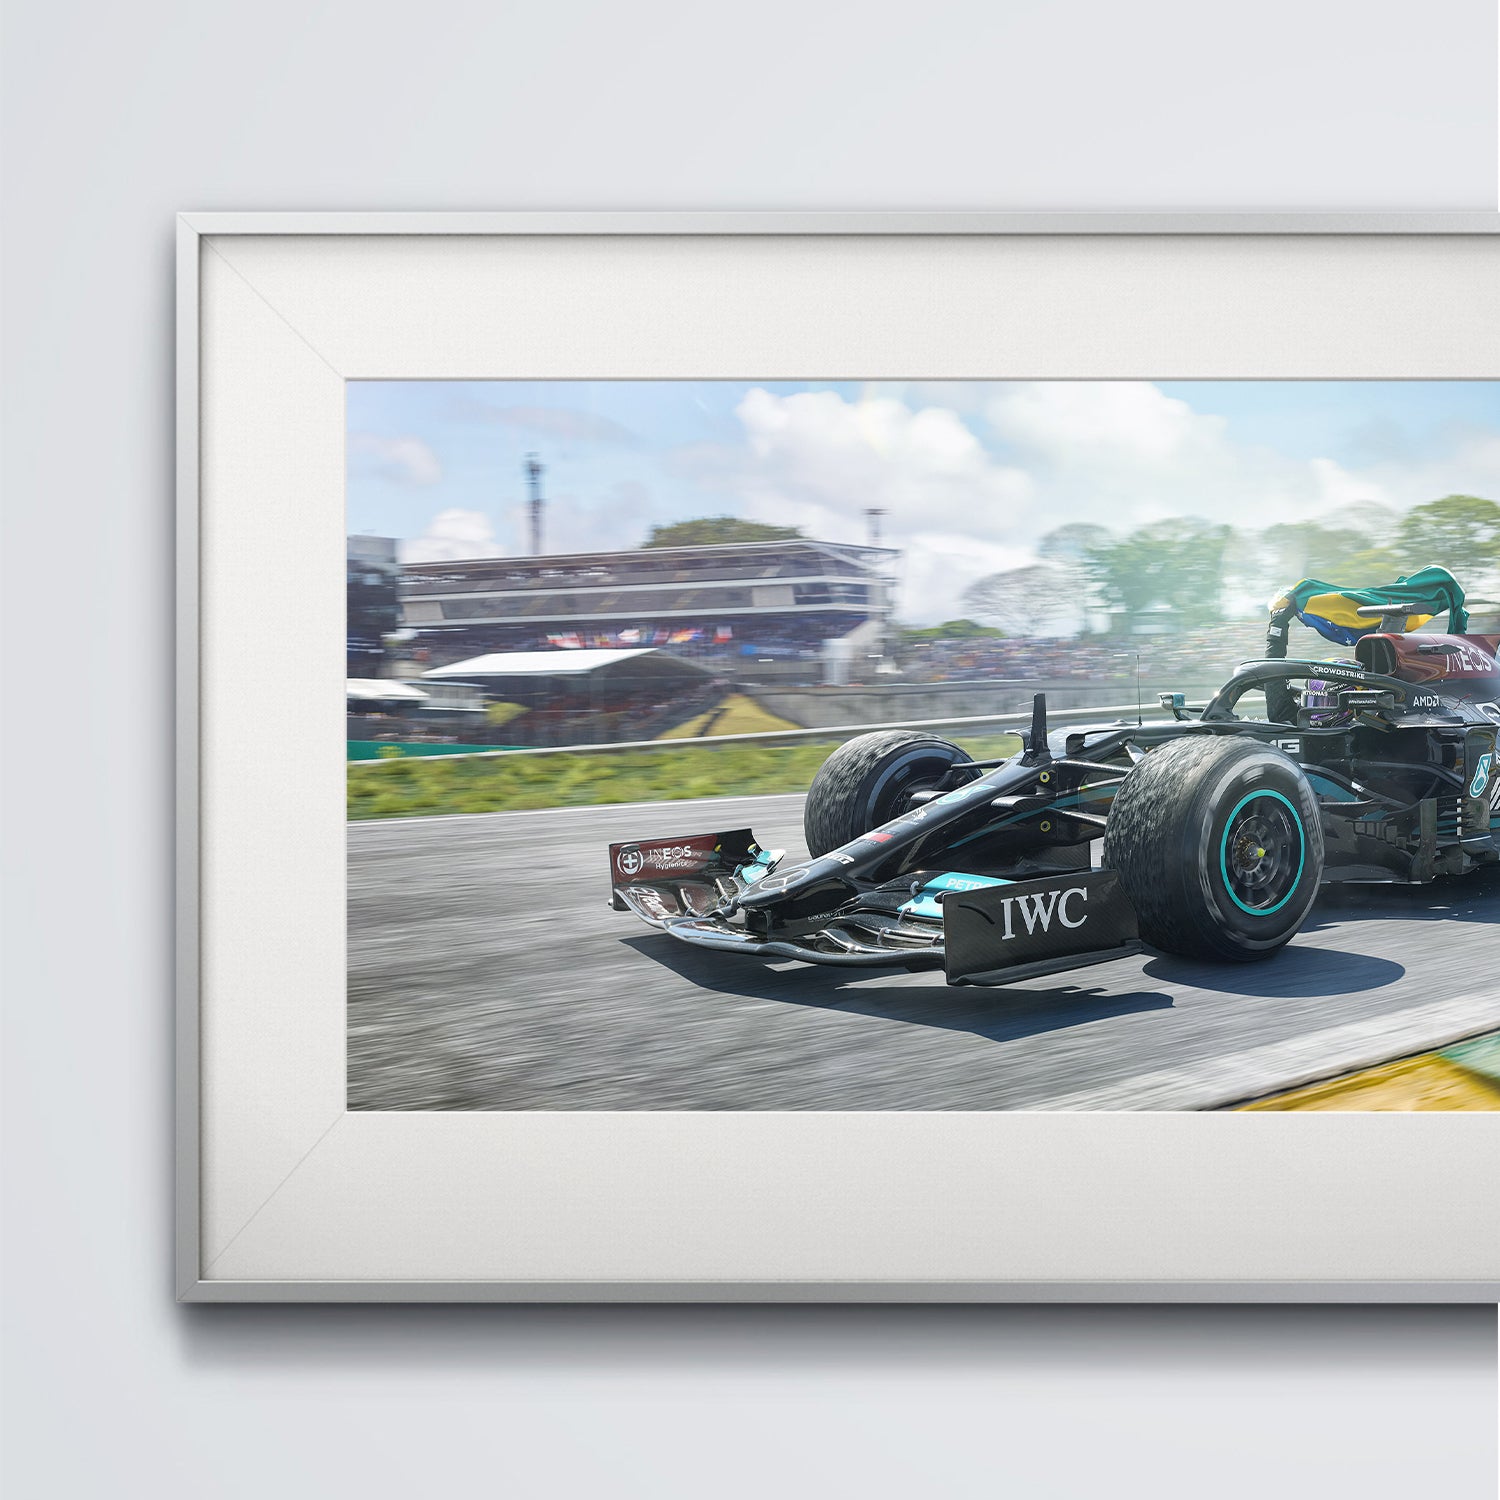 Obrigado Brasil - Mercedes-AMG - Lewis Hamilton - São Paulo - 2021